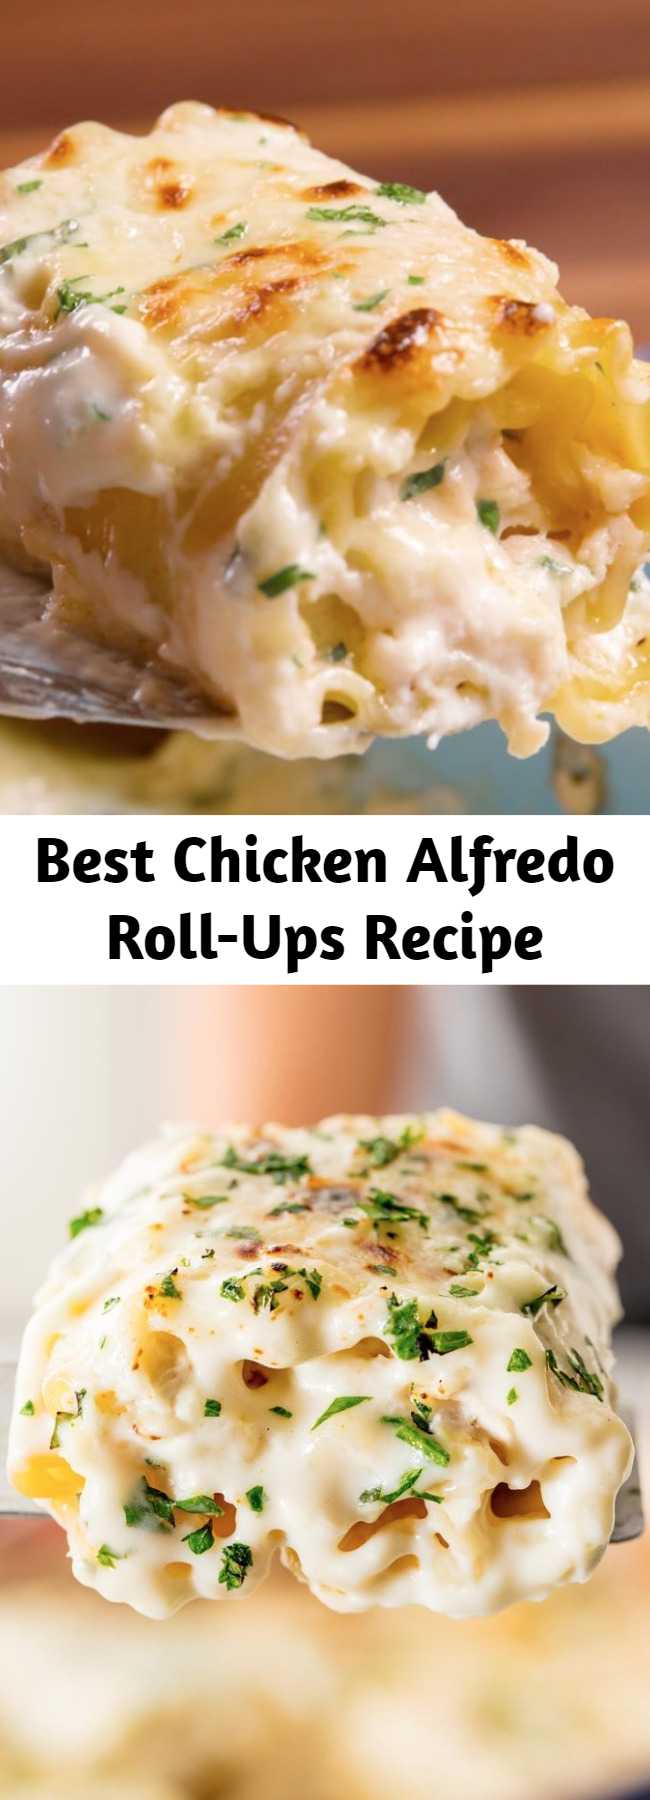 Best Chicken Alfredo Roll-Ups Recipe - Looking for an alfredo recipe? These Chicken Alfredo Roll-Ups are the best. A dreamy, creamy weeknight dinner masterpiece.